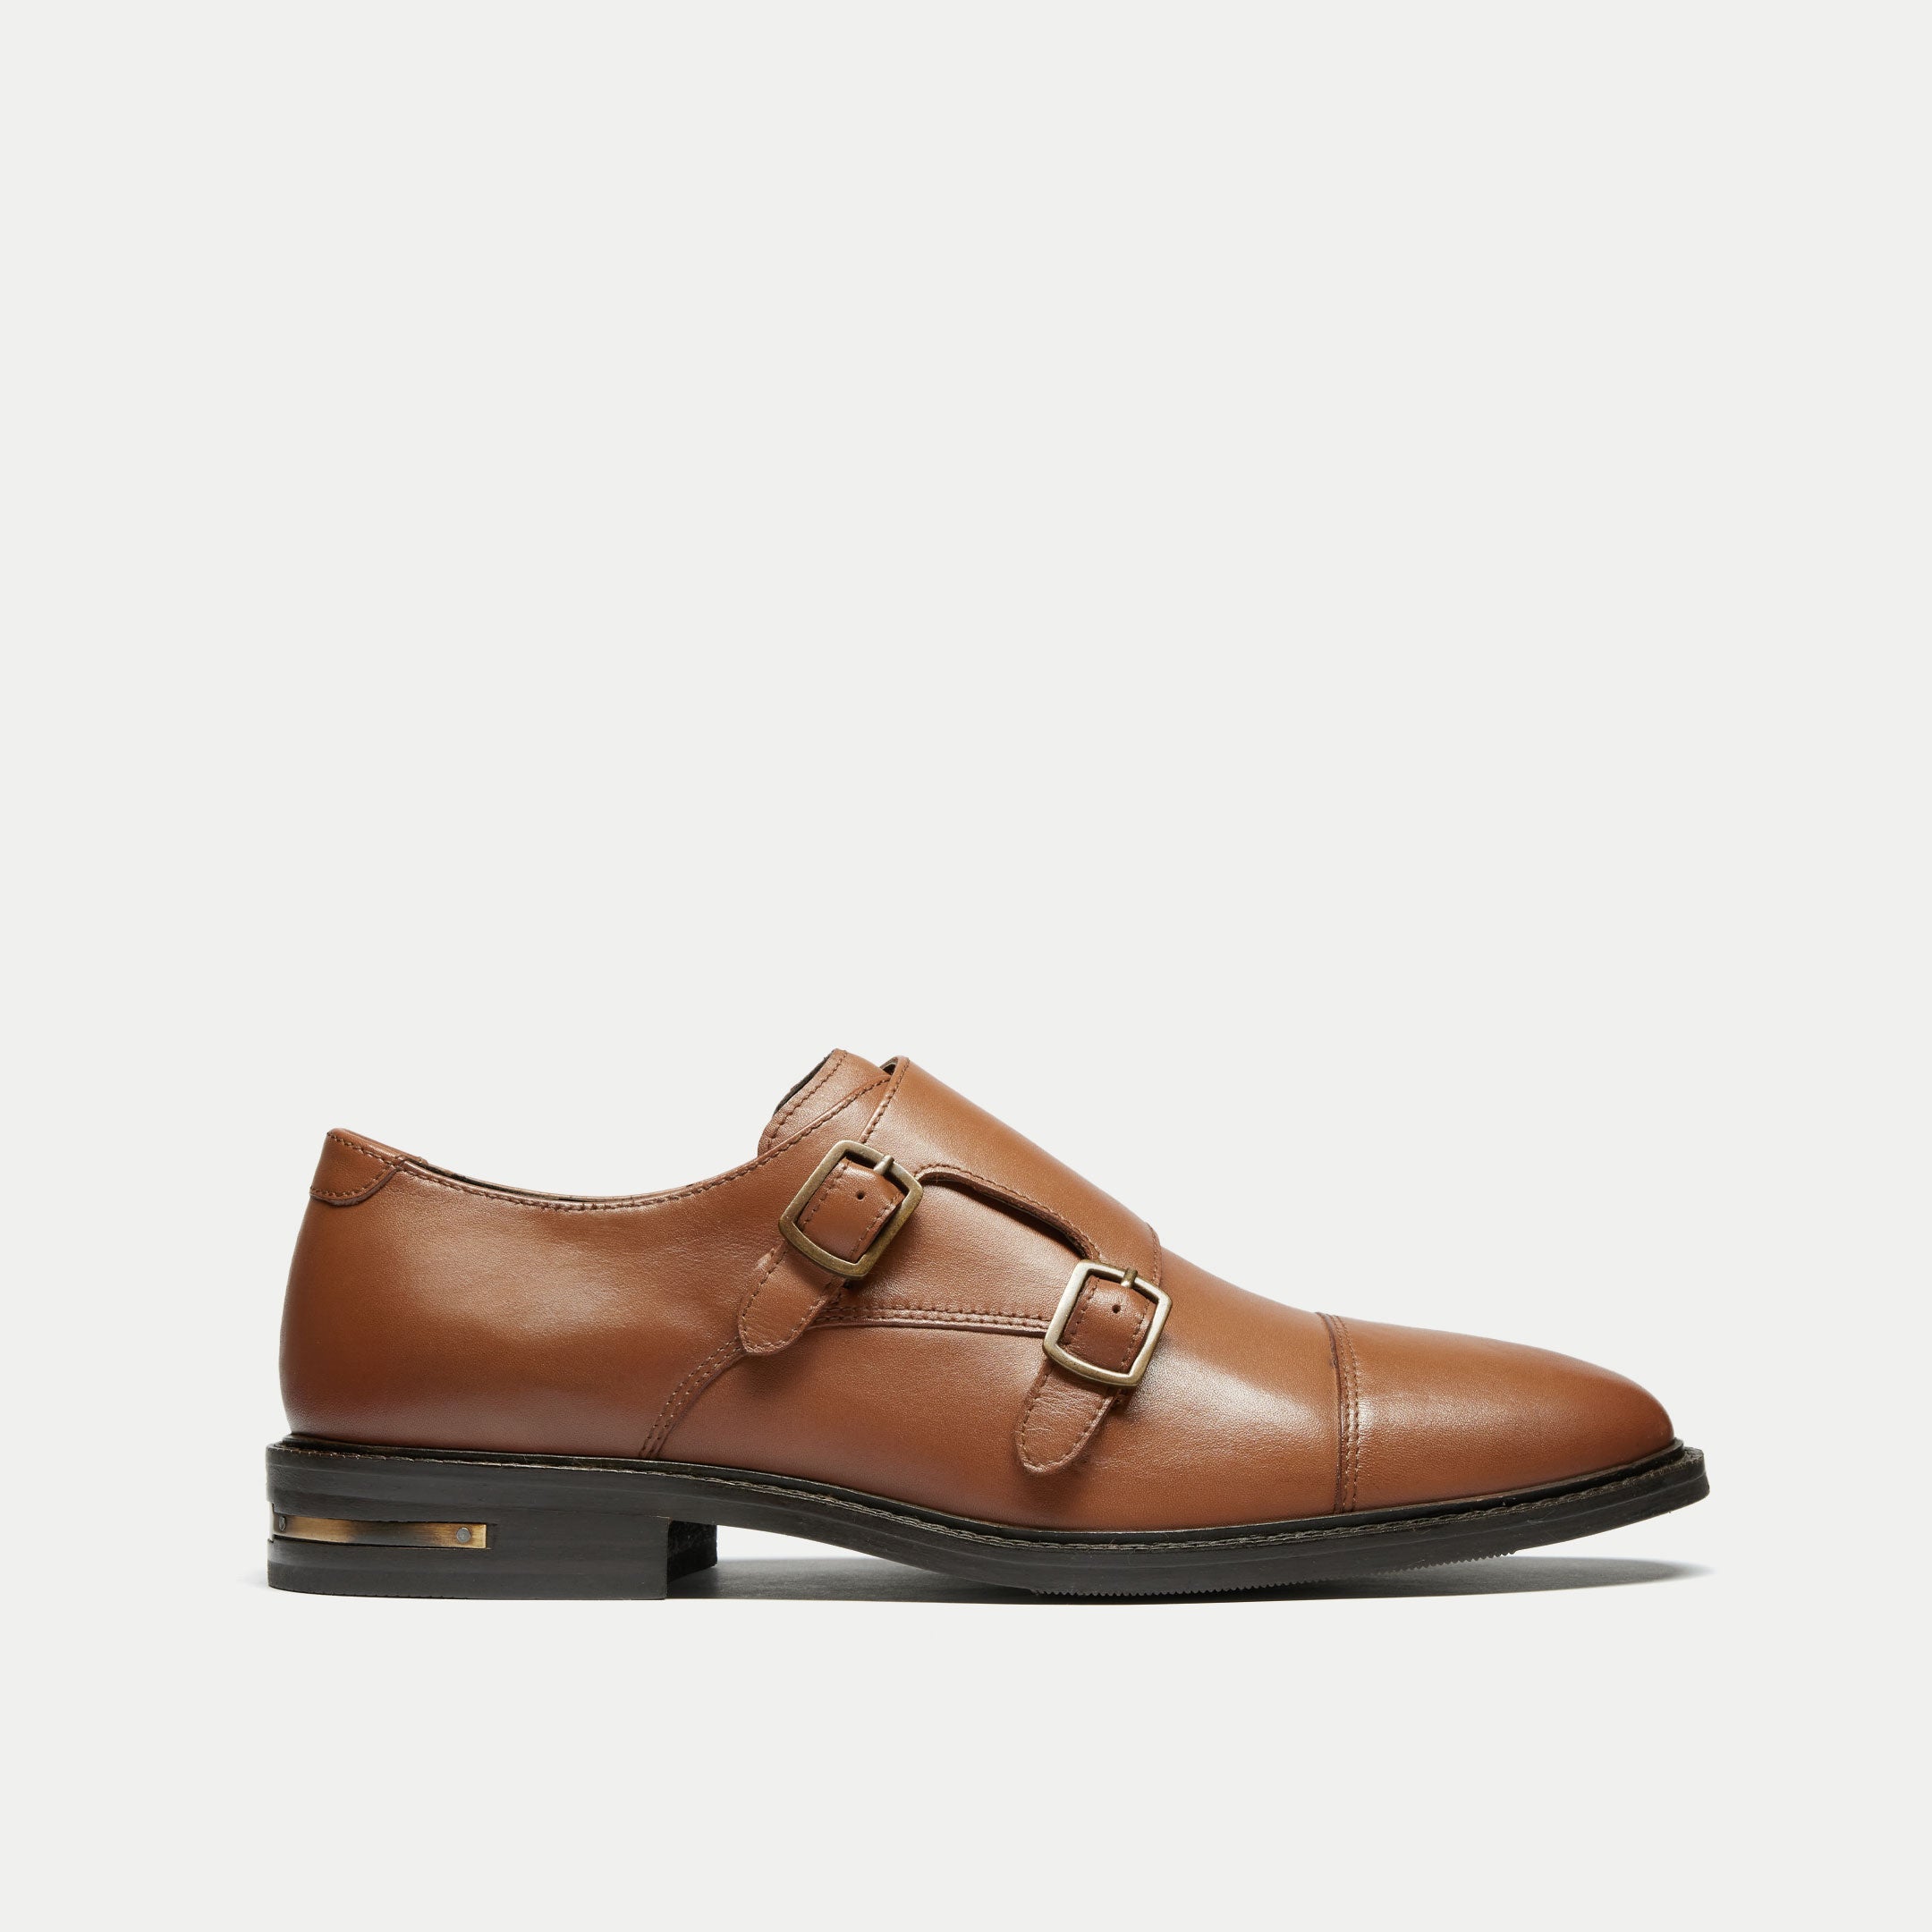 Walk London Mens Oliver Monk Strap Shoe in Tan Leather